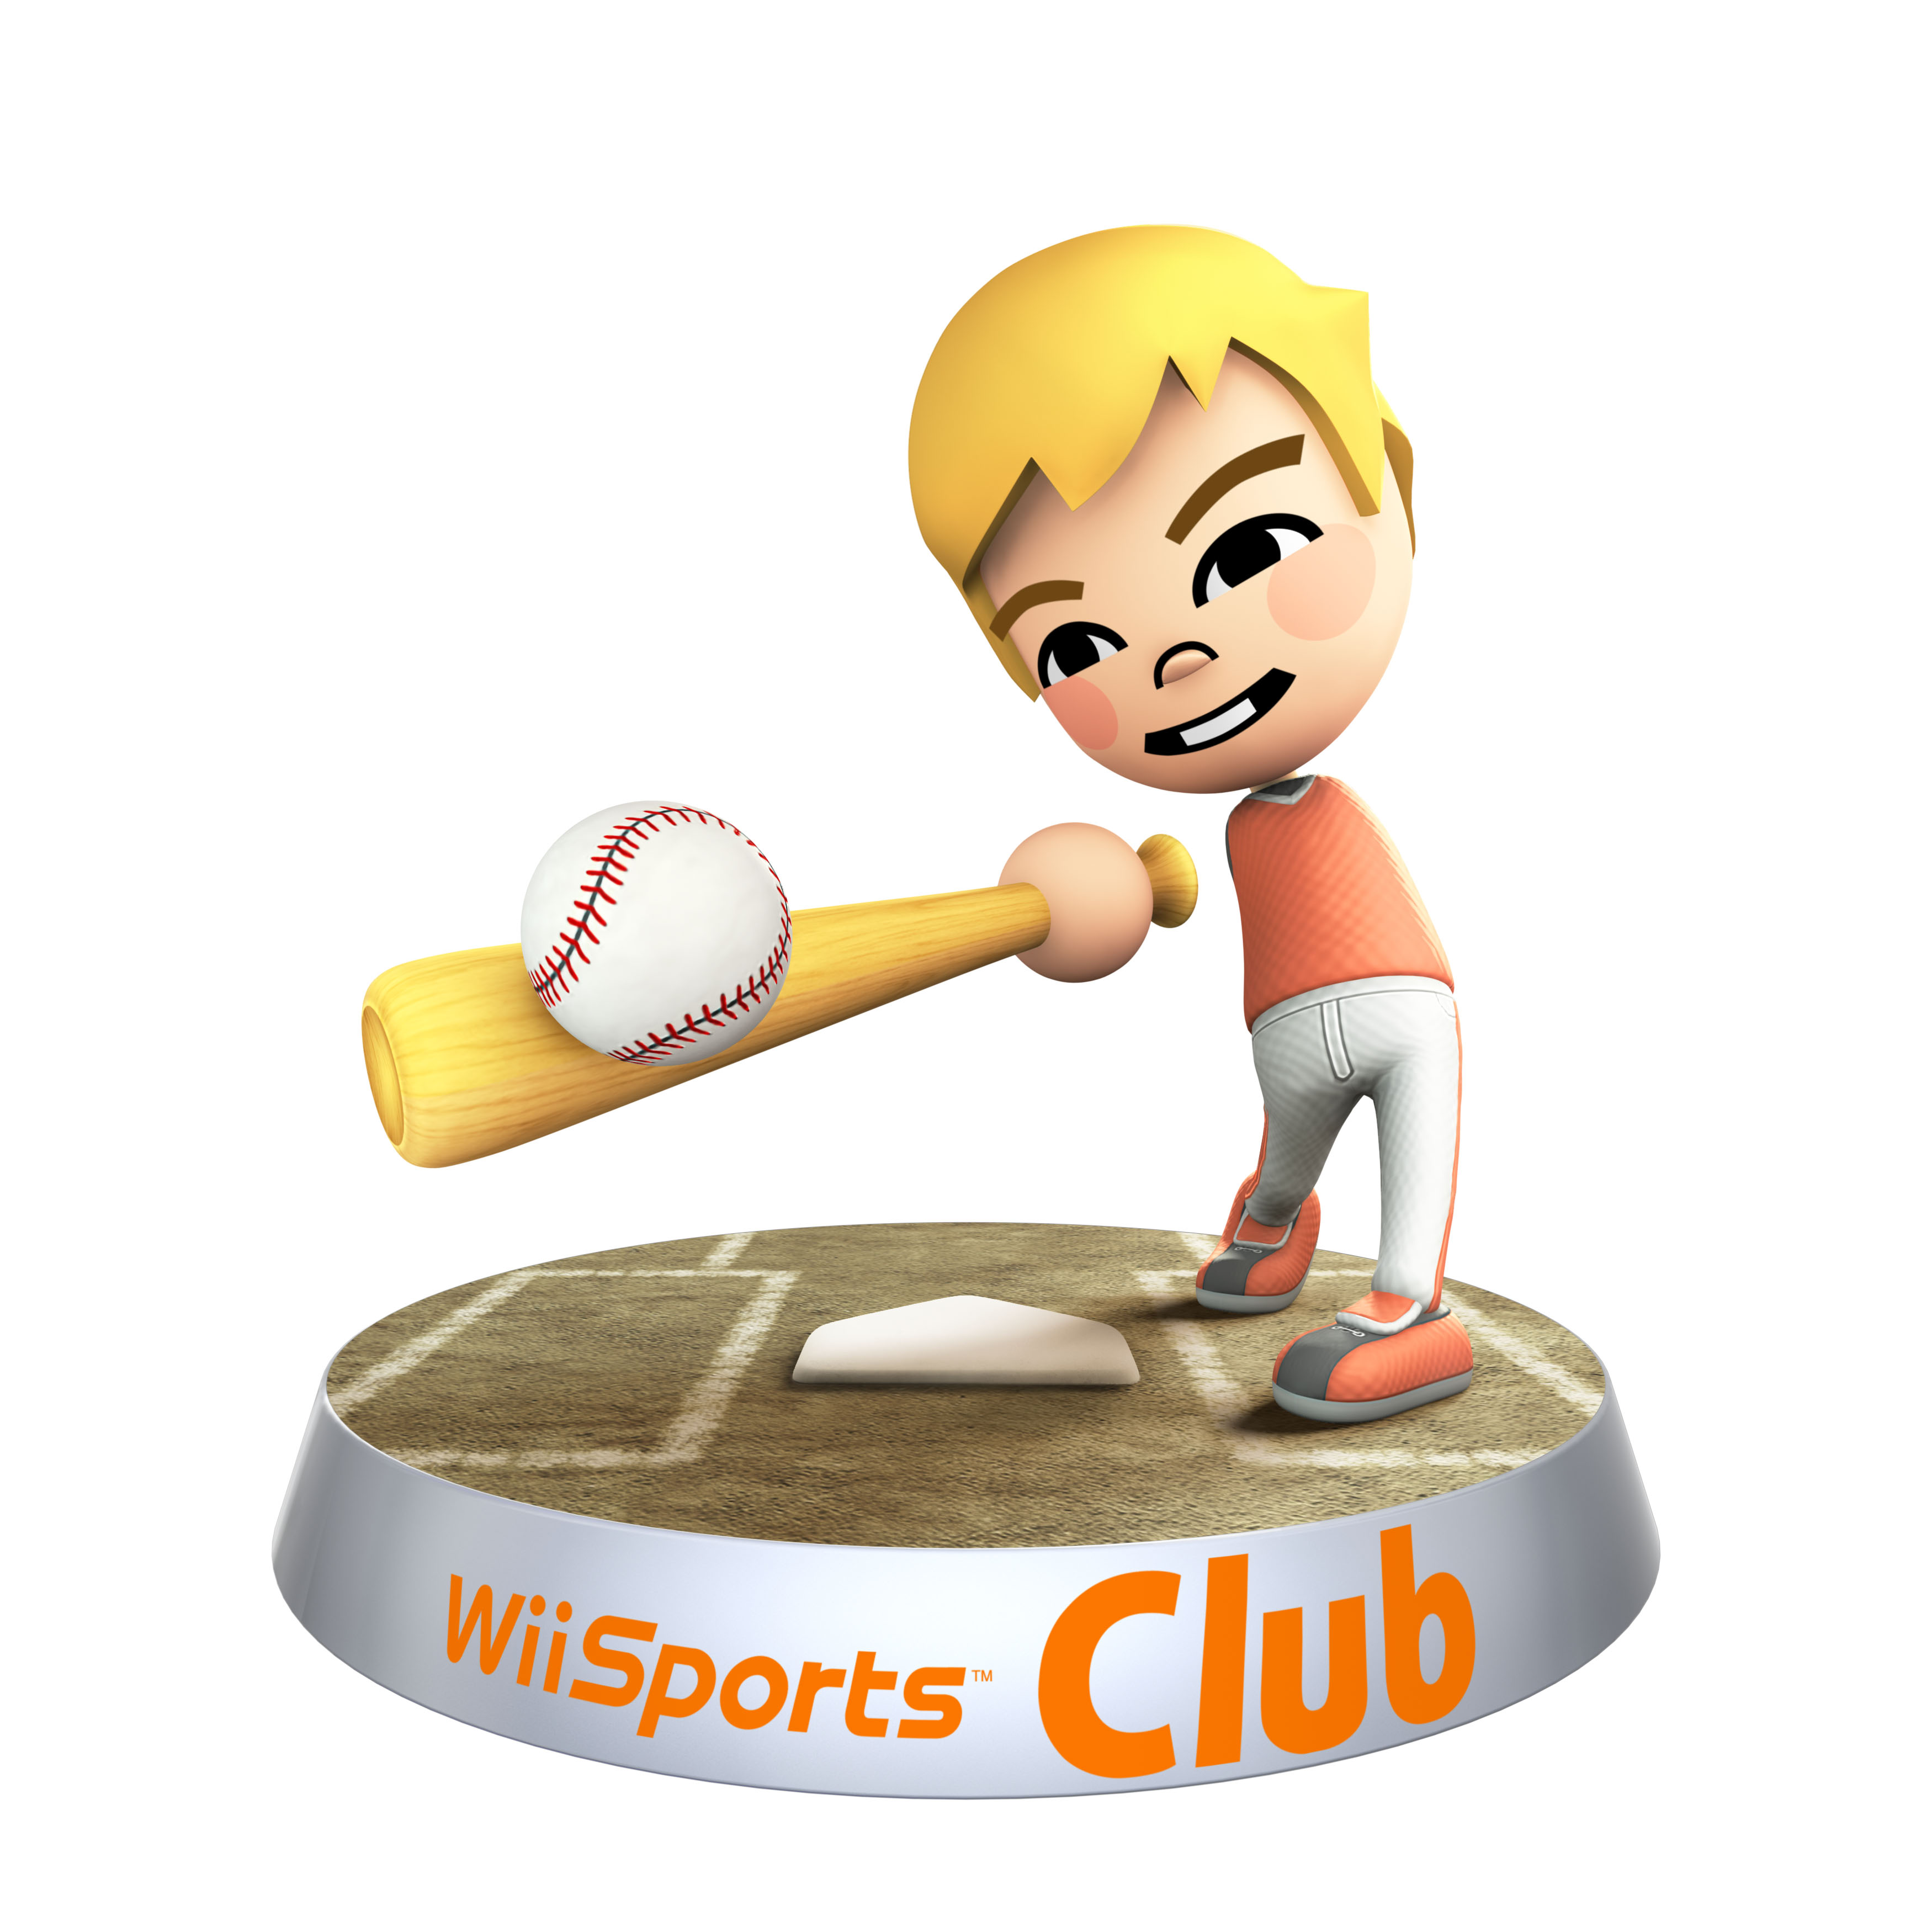 Wii Sports Club Art And Assets Nintendobserver